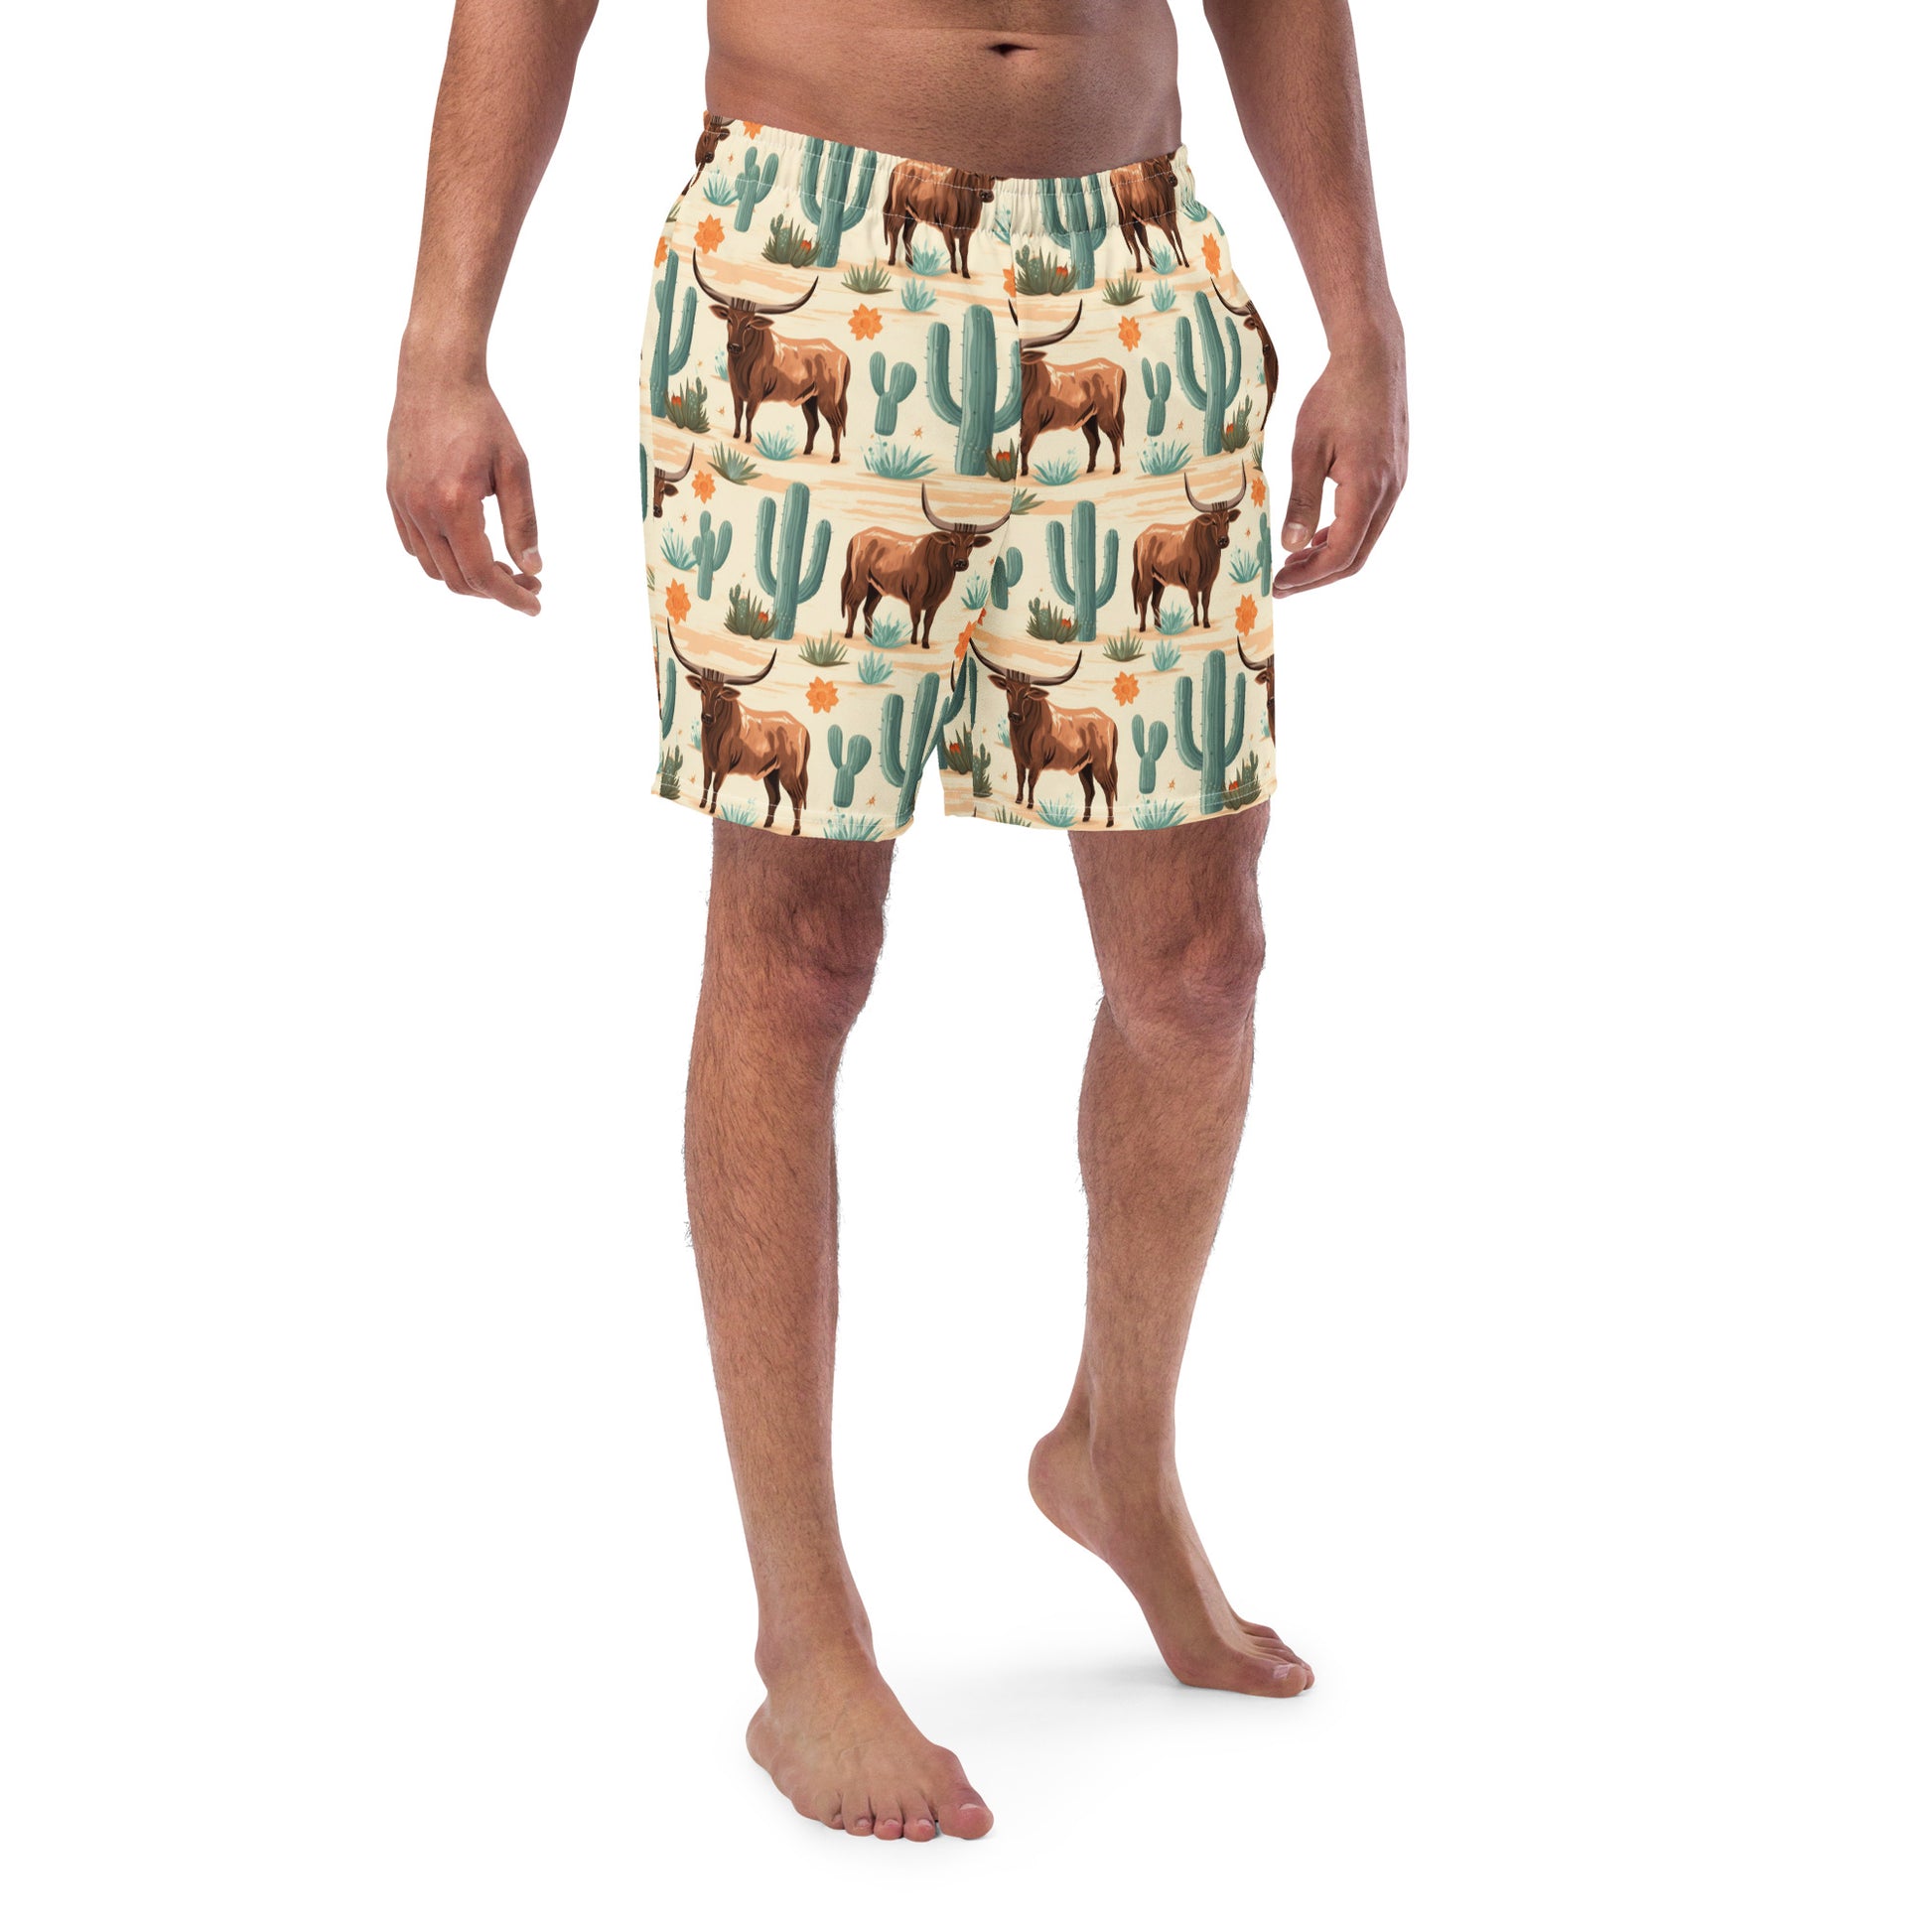 Texas Longhorn Men Swim Trunks, Cactus Western Desert Beach Mesh Pockets Bathing Suit Plus Size Sustainable Designer Shorts Starcove Fashion